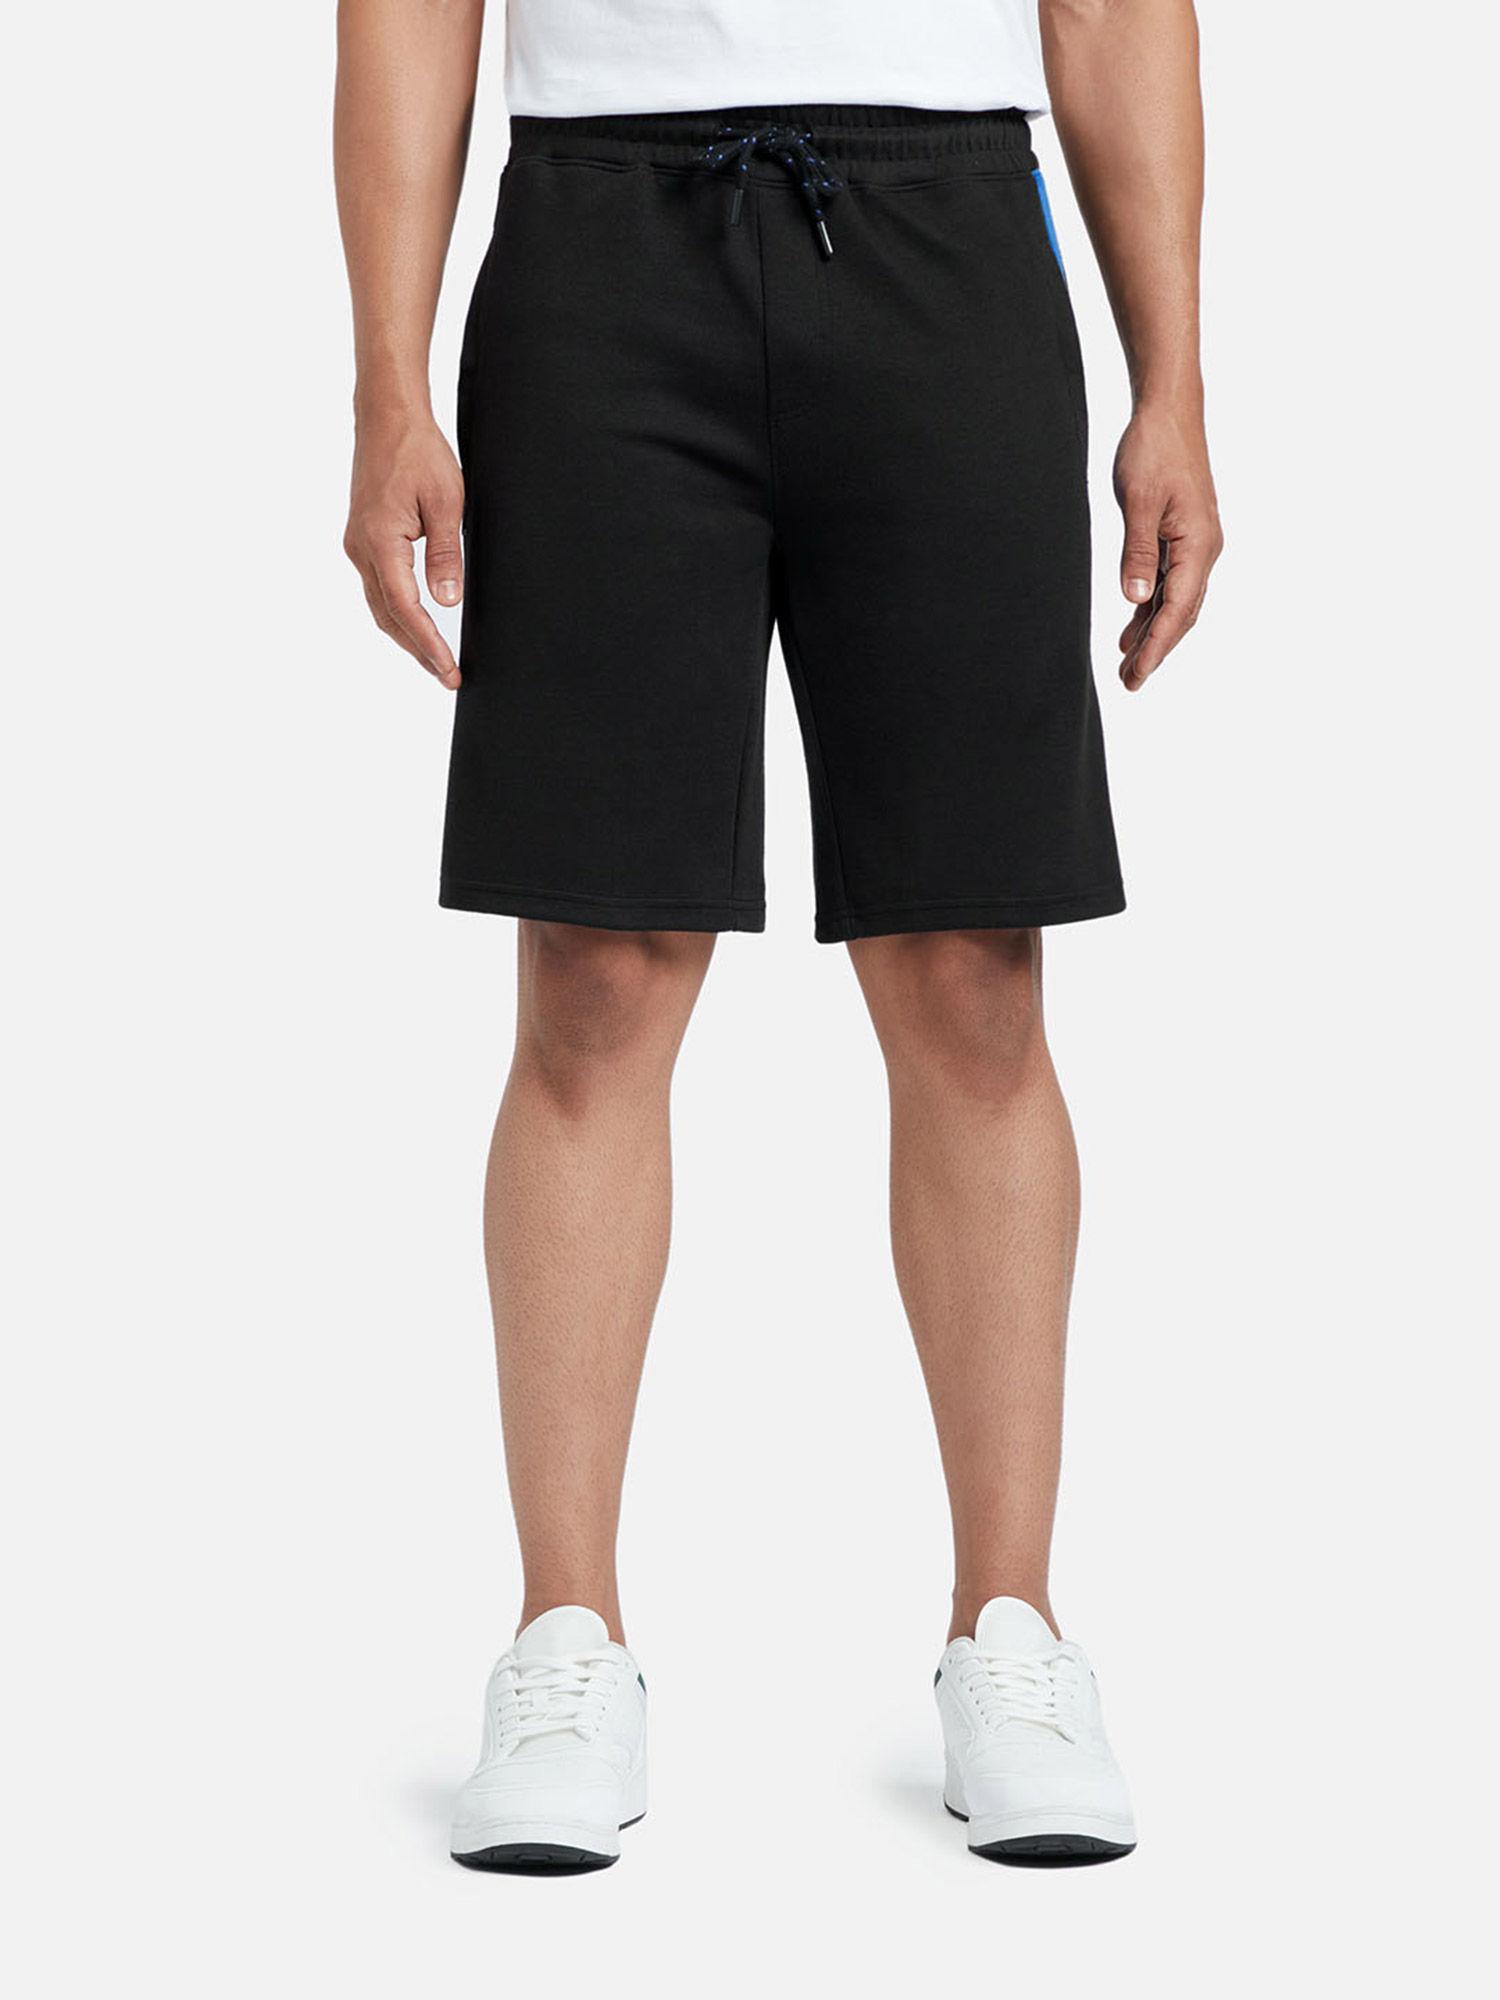 men cotton rich shorts with zipper pocket